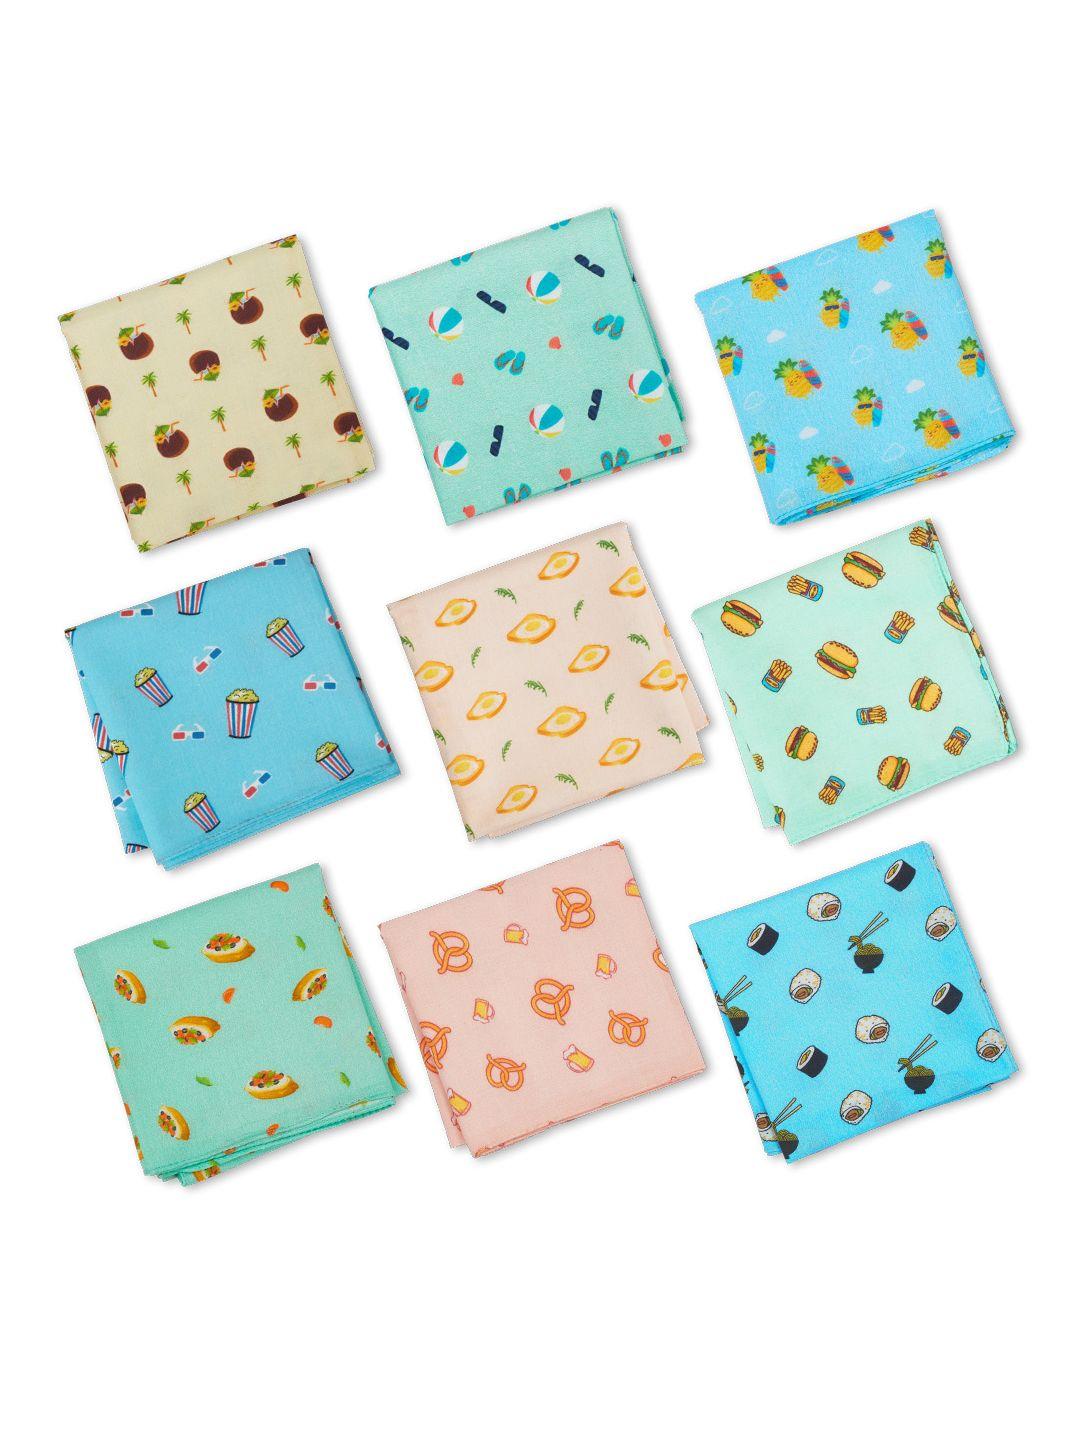 hexafun men 9 pieces multicolored printed pure organic cotton handkerchief set